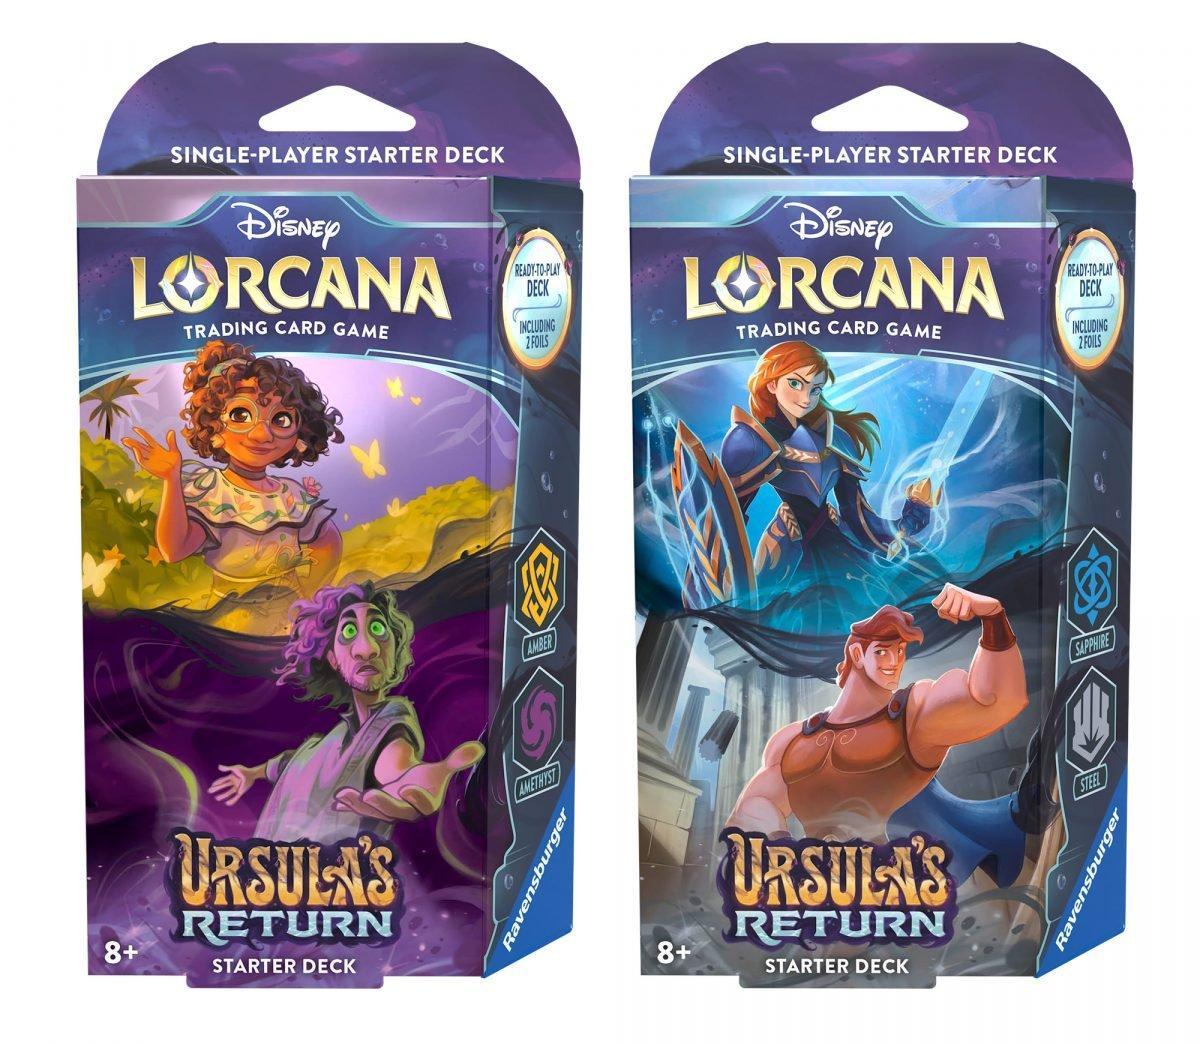 Lorcana: Ursula’s Return brings Encanto magic to the TCG nerdist.com/article/disney…